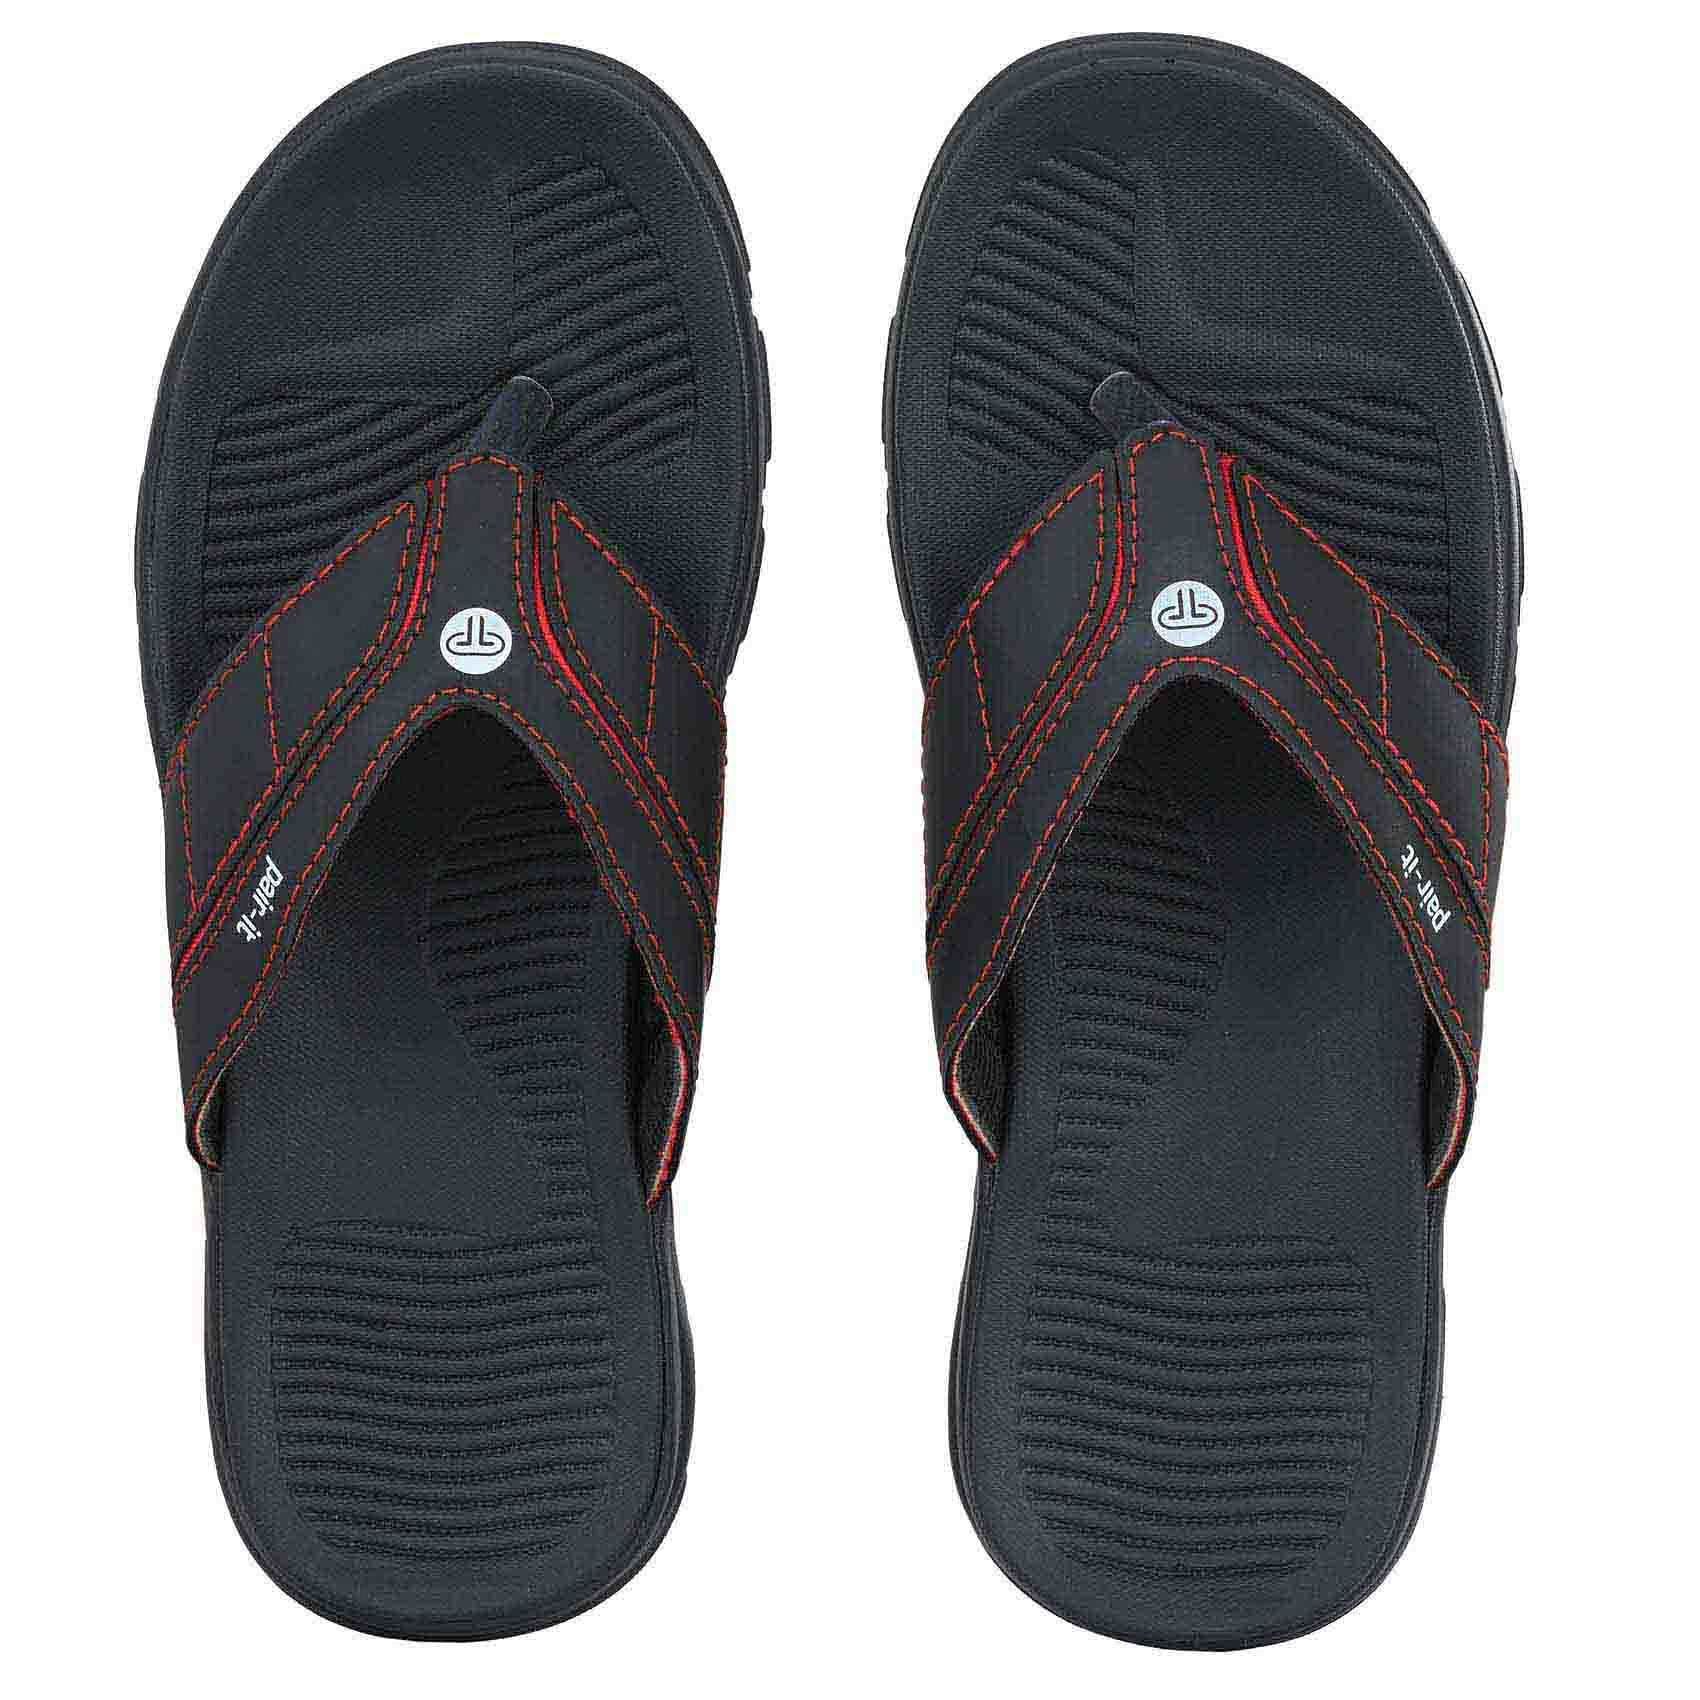 Pair-it Men's Rubberised EVA Slippers-LZ-Slippers121-Black/Red